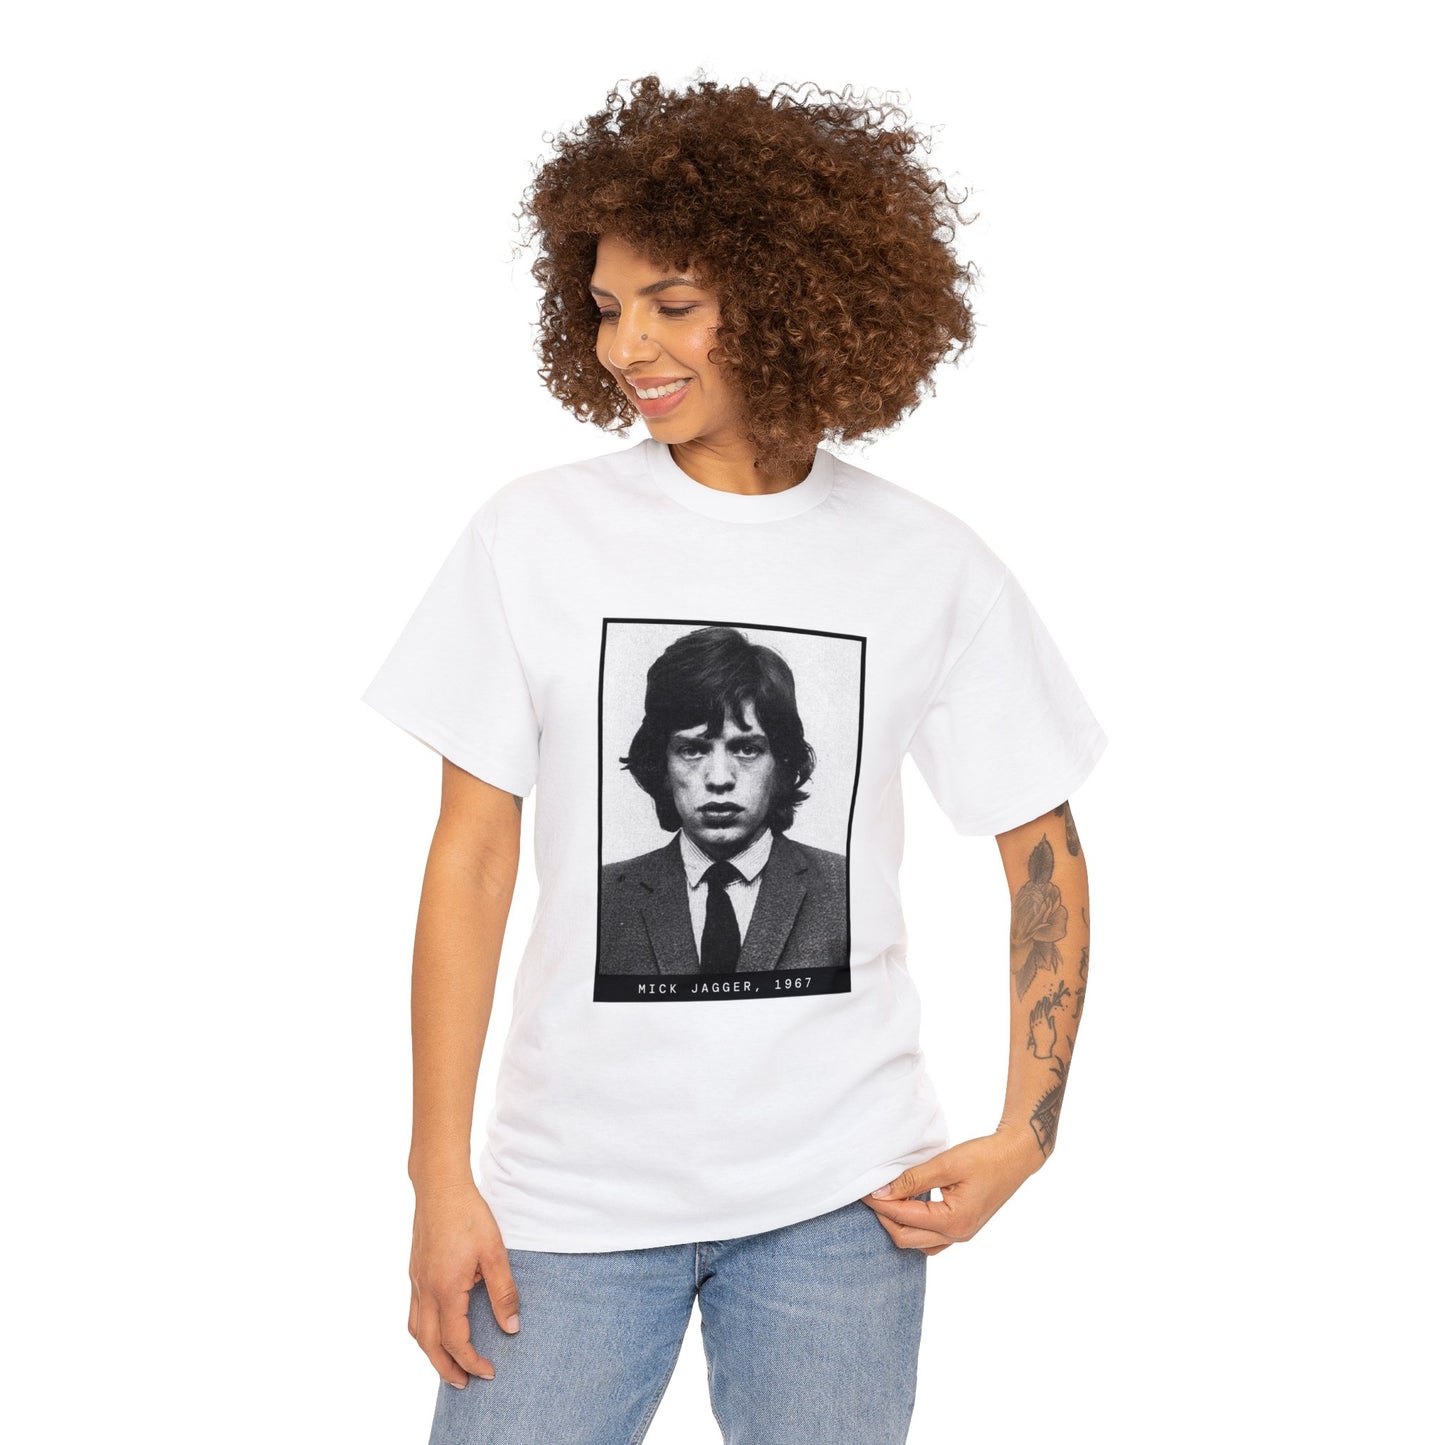 Mick Jagger, 1967 Mugshot Tee